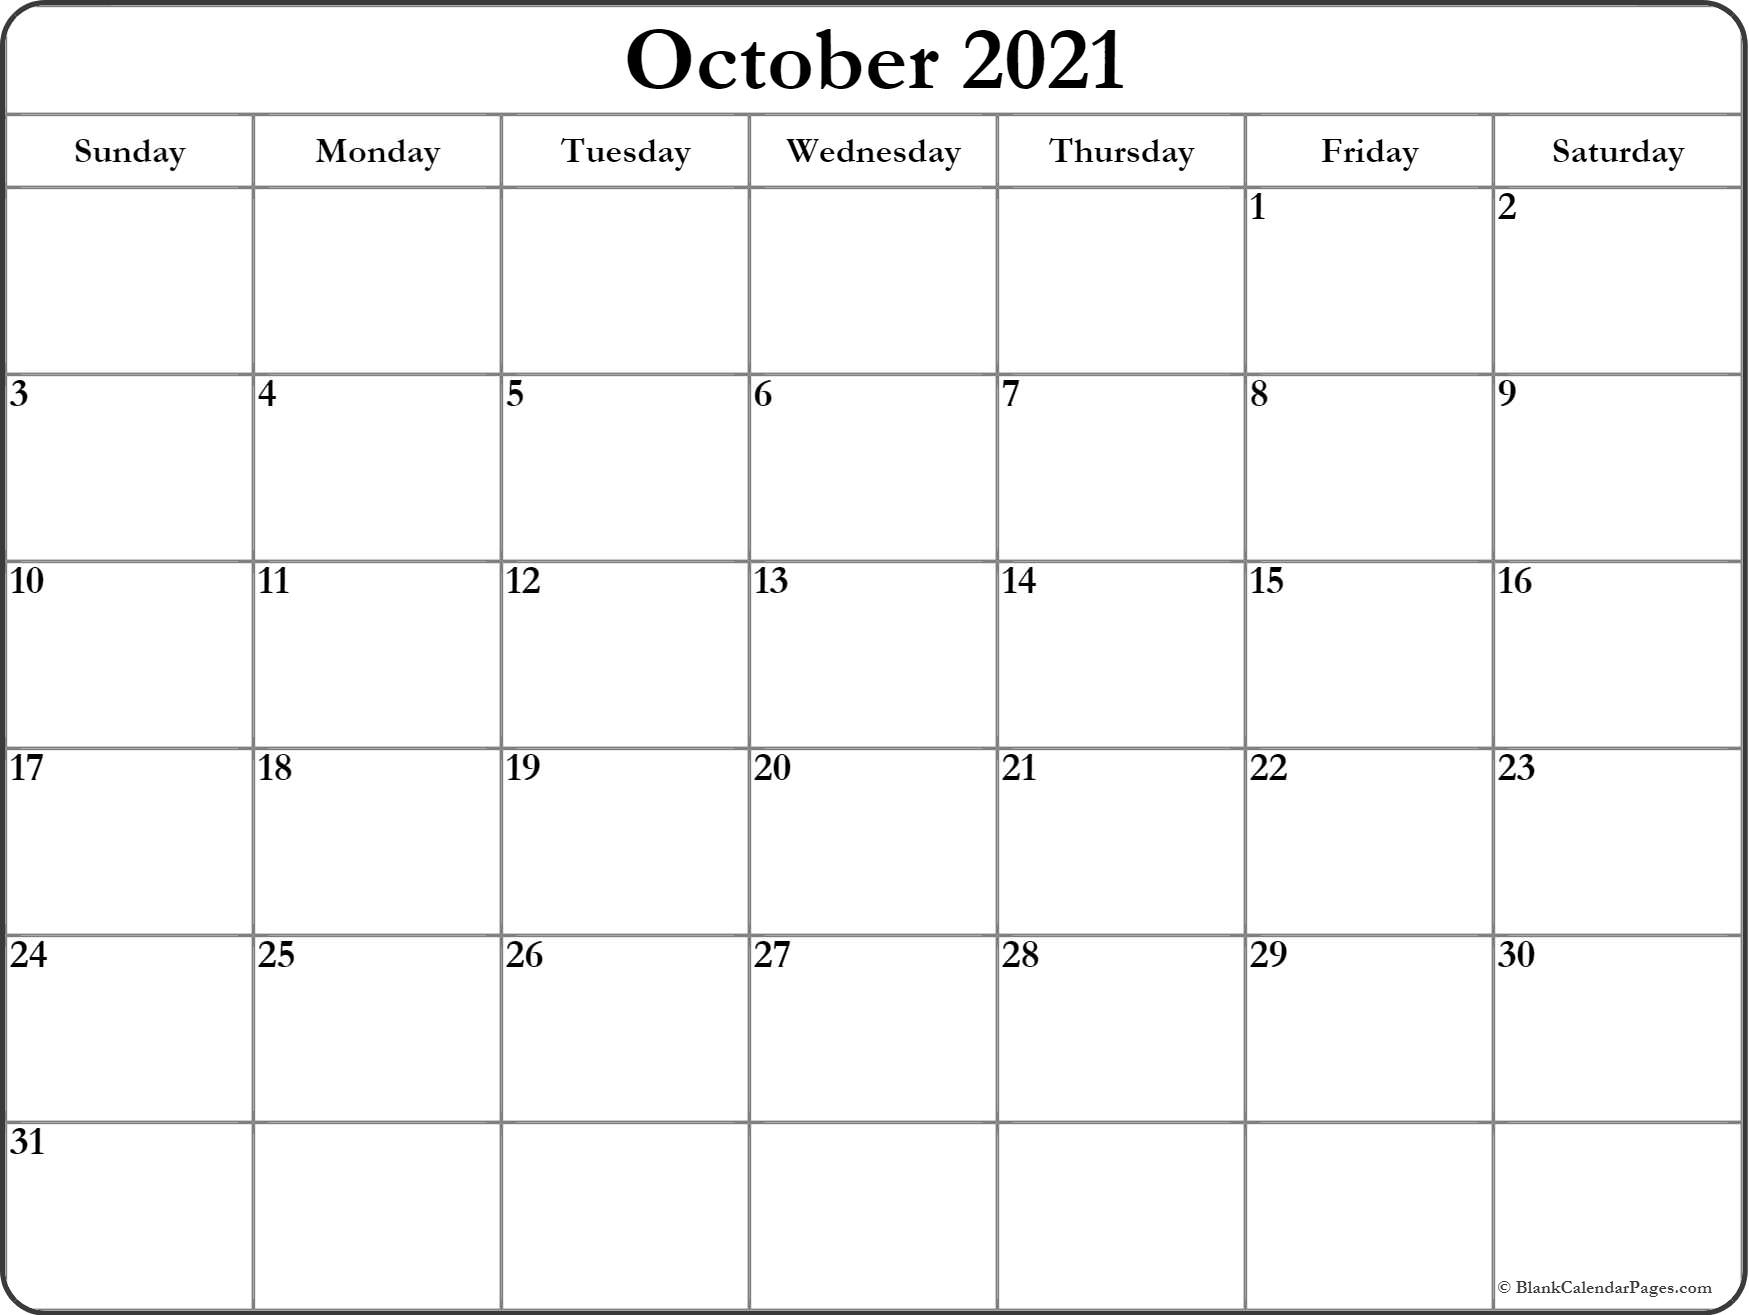 October 2021 Calendar | Free Printable Calendar Print A Calendar October 2021